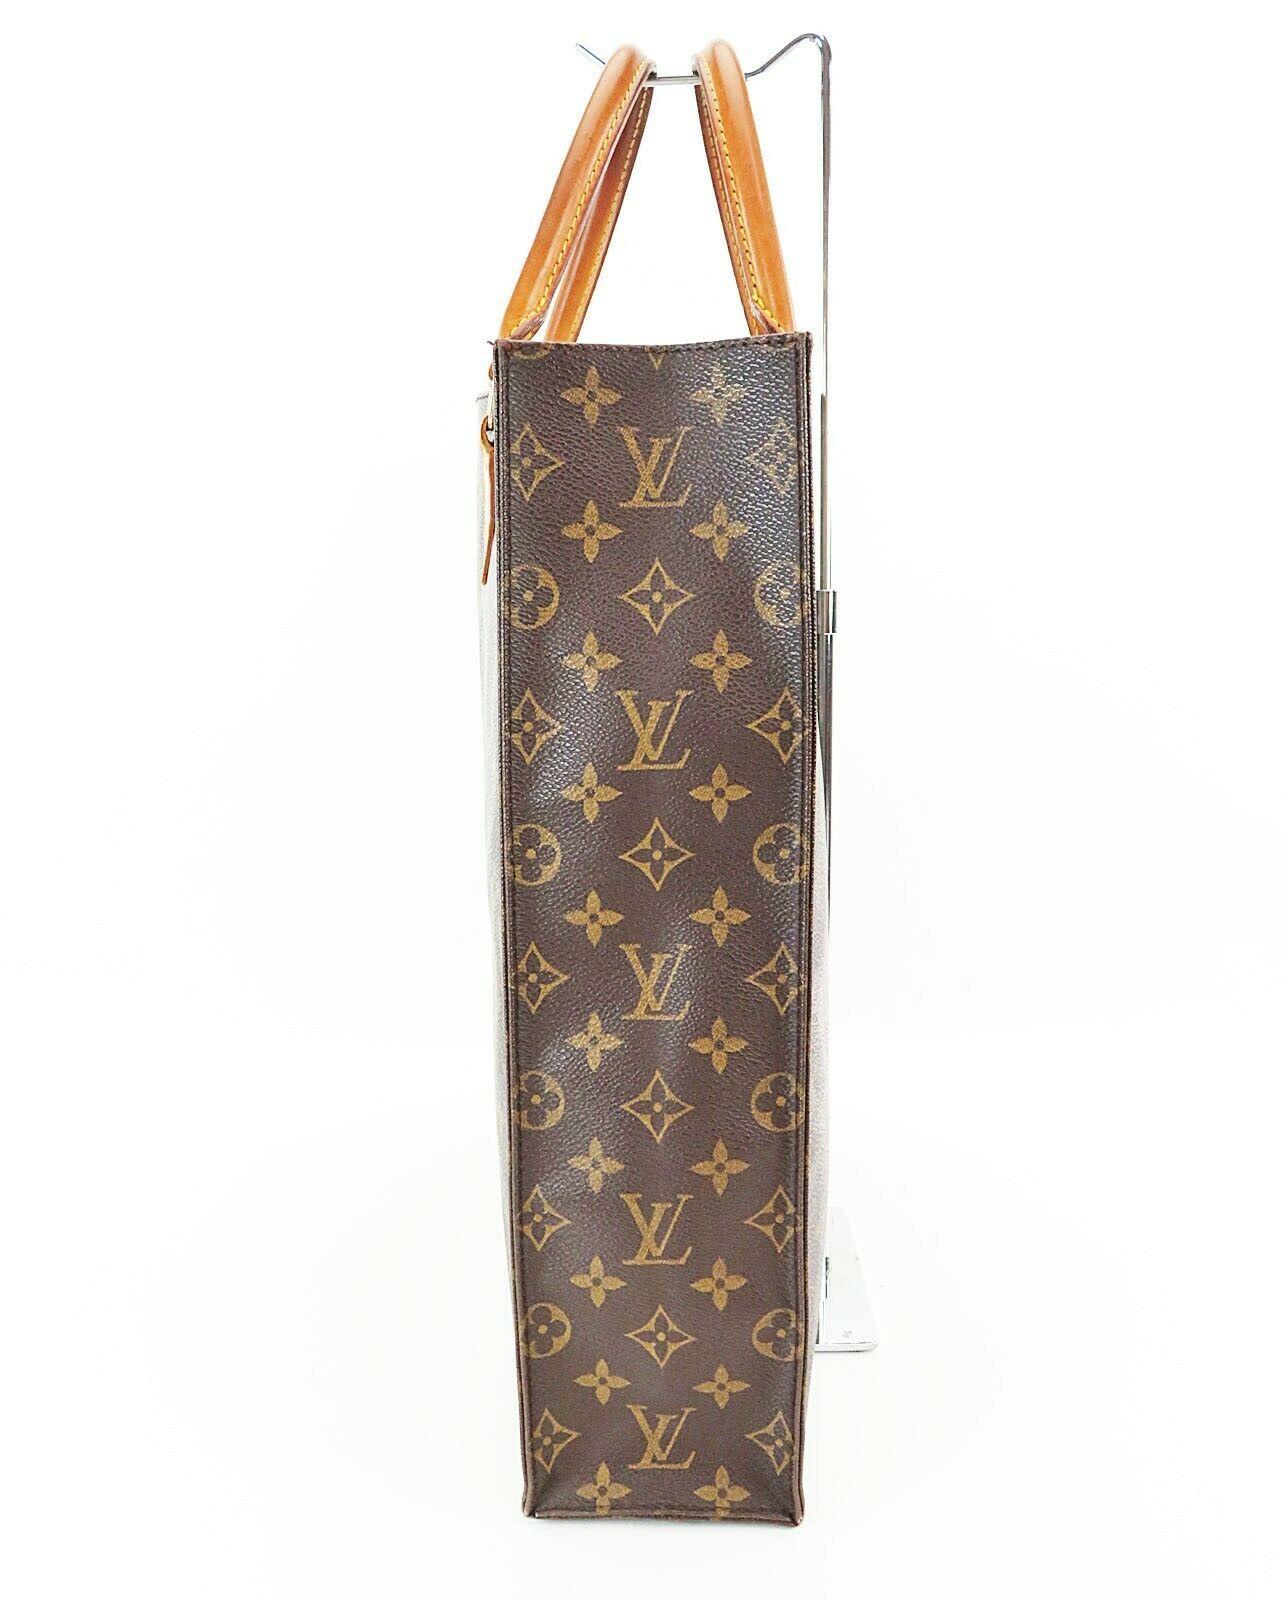 Authentic Louis Vuitton Sac Plat Monogram Tote Shopping Bag Purse #36665 - Women&#39;s Bags & Handbags